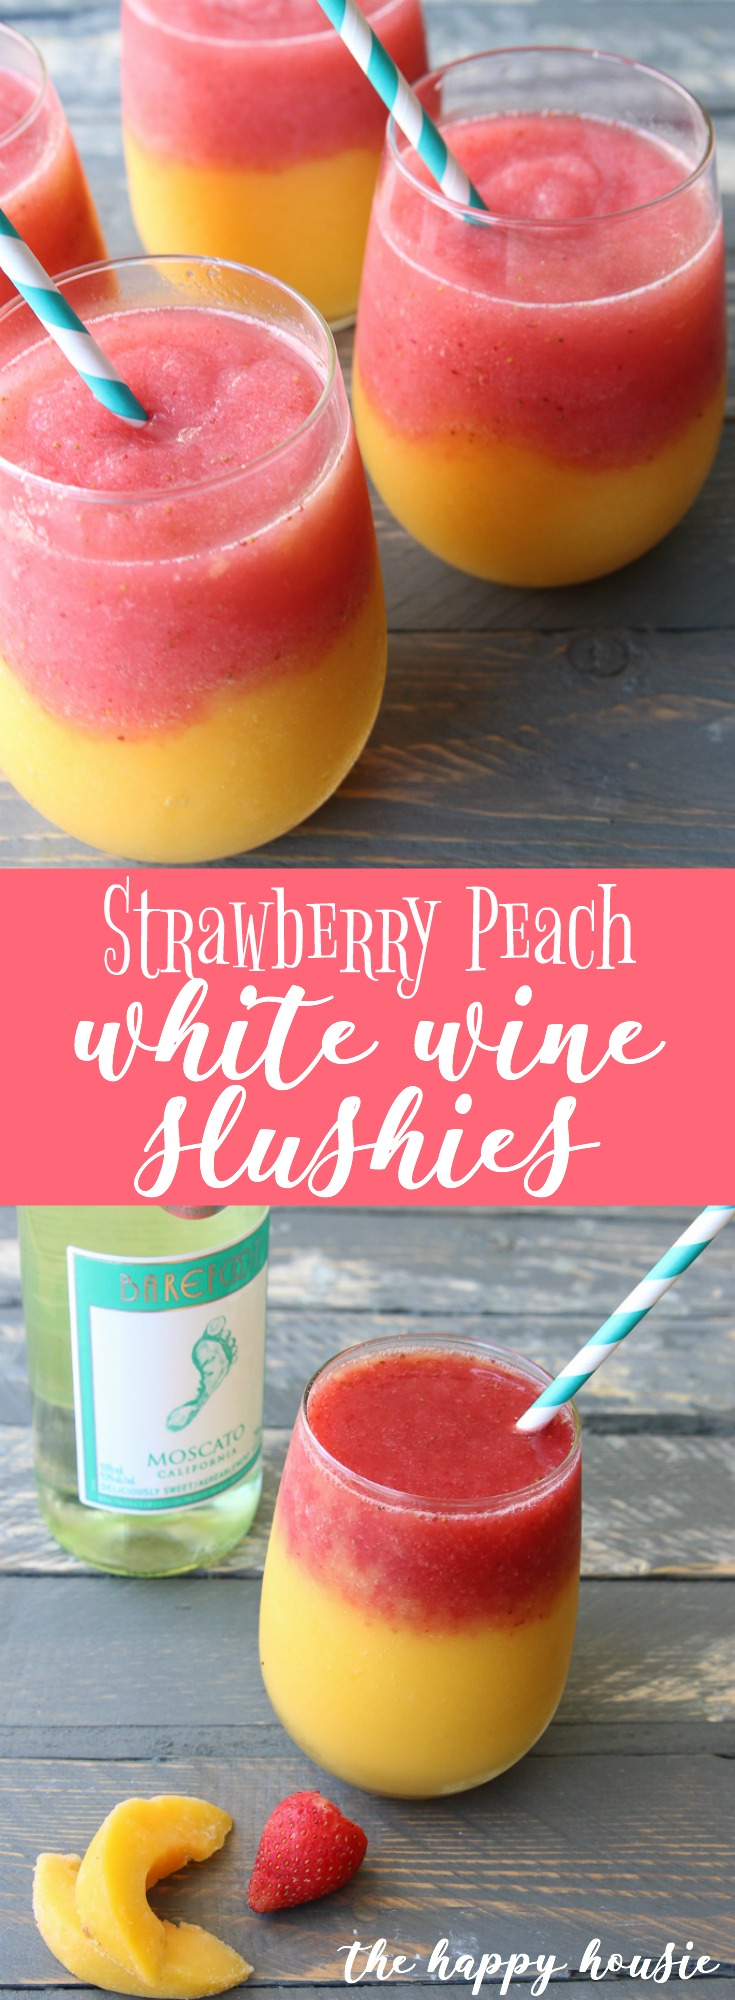 Strawberry peach white wine slushies graphic.